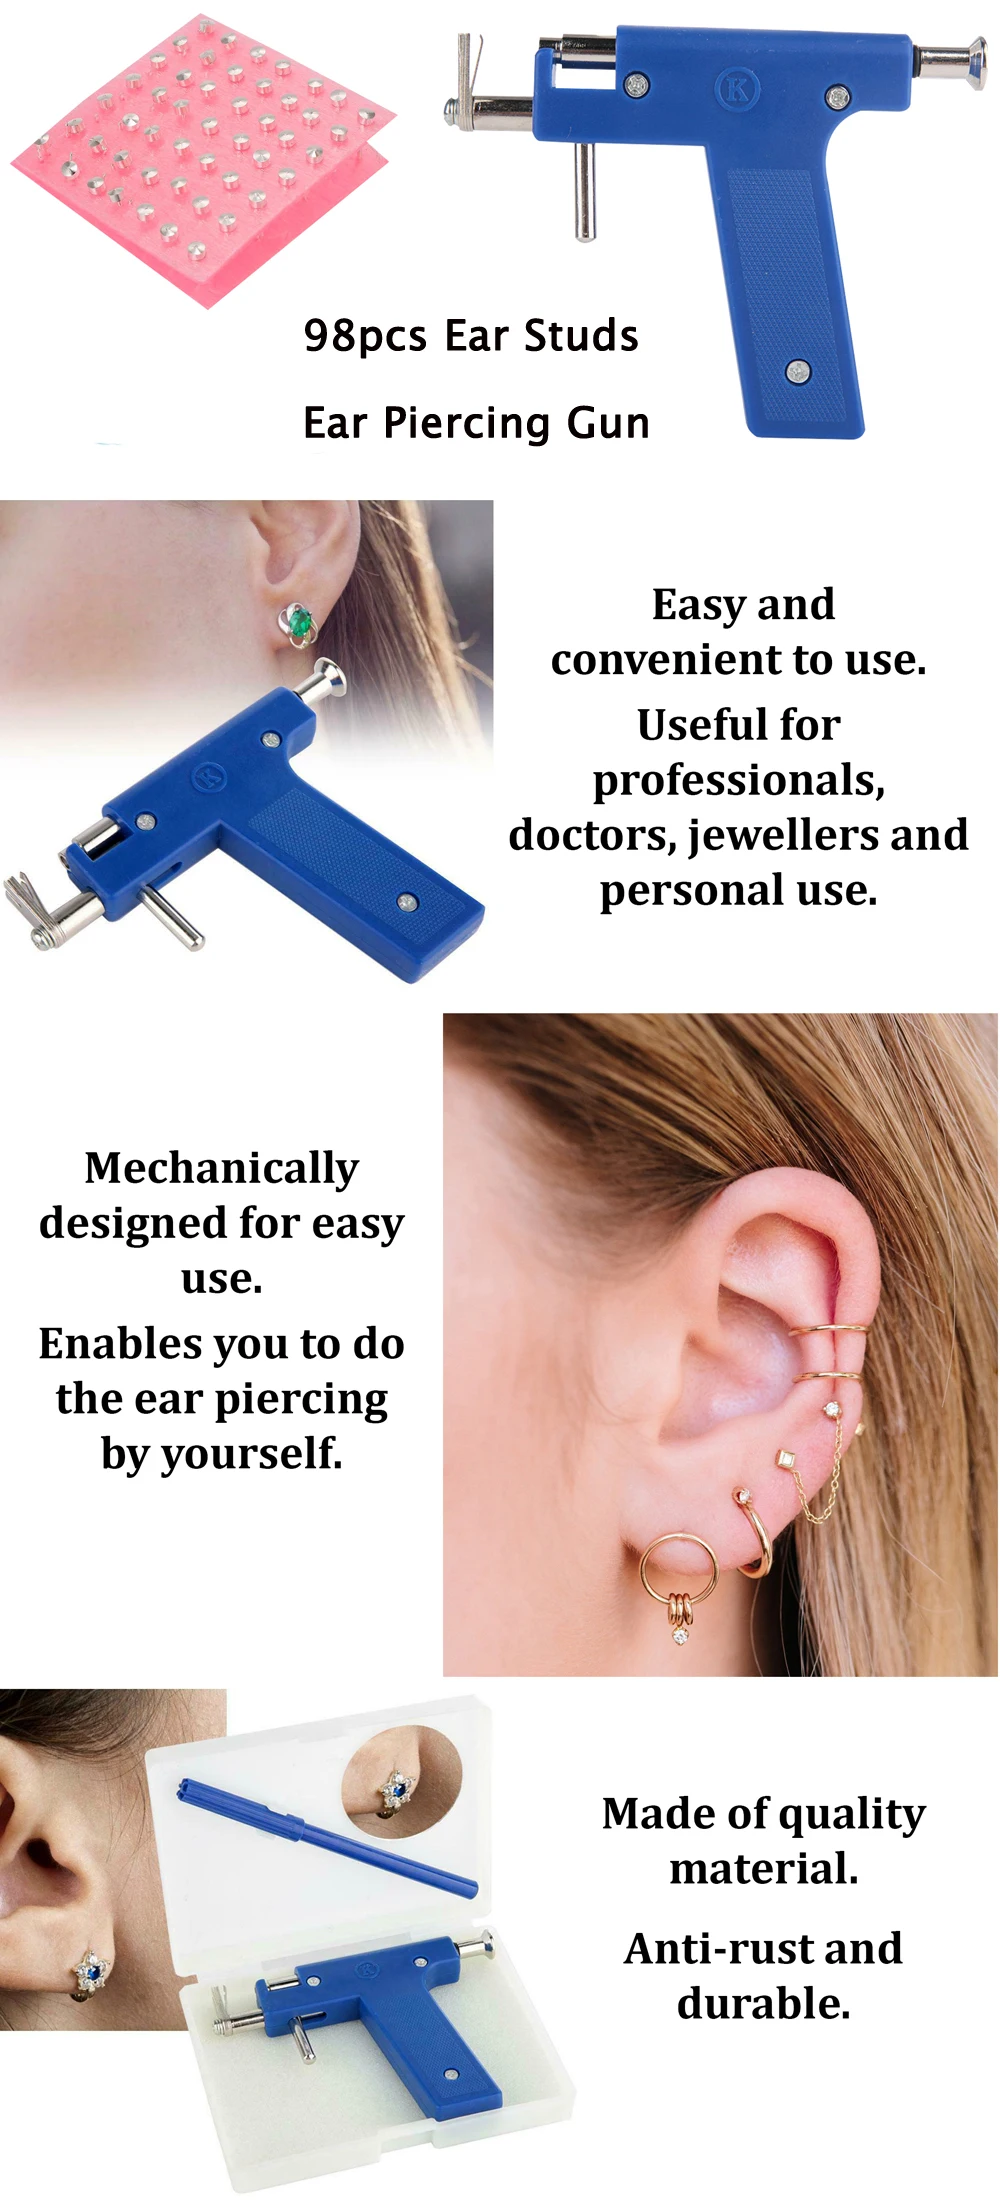 Ear Piercing Tool Kit,including Ear Piercing Gun, Mark Pen